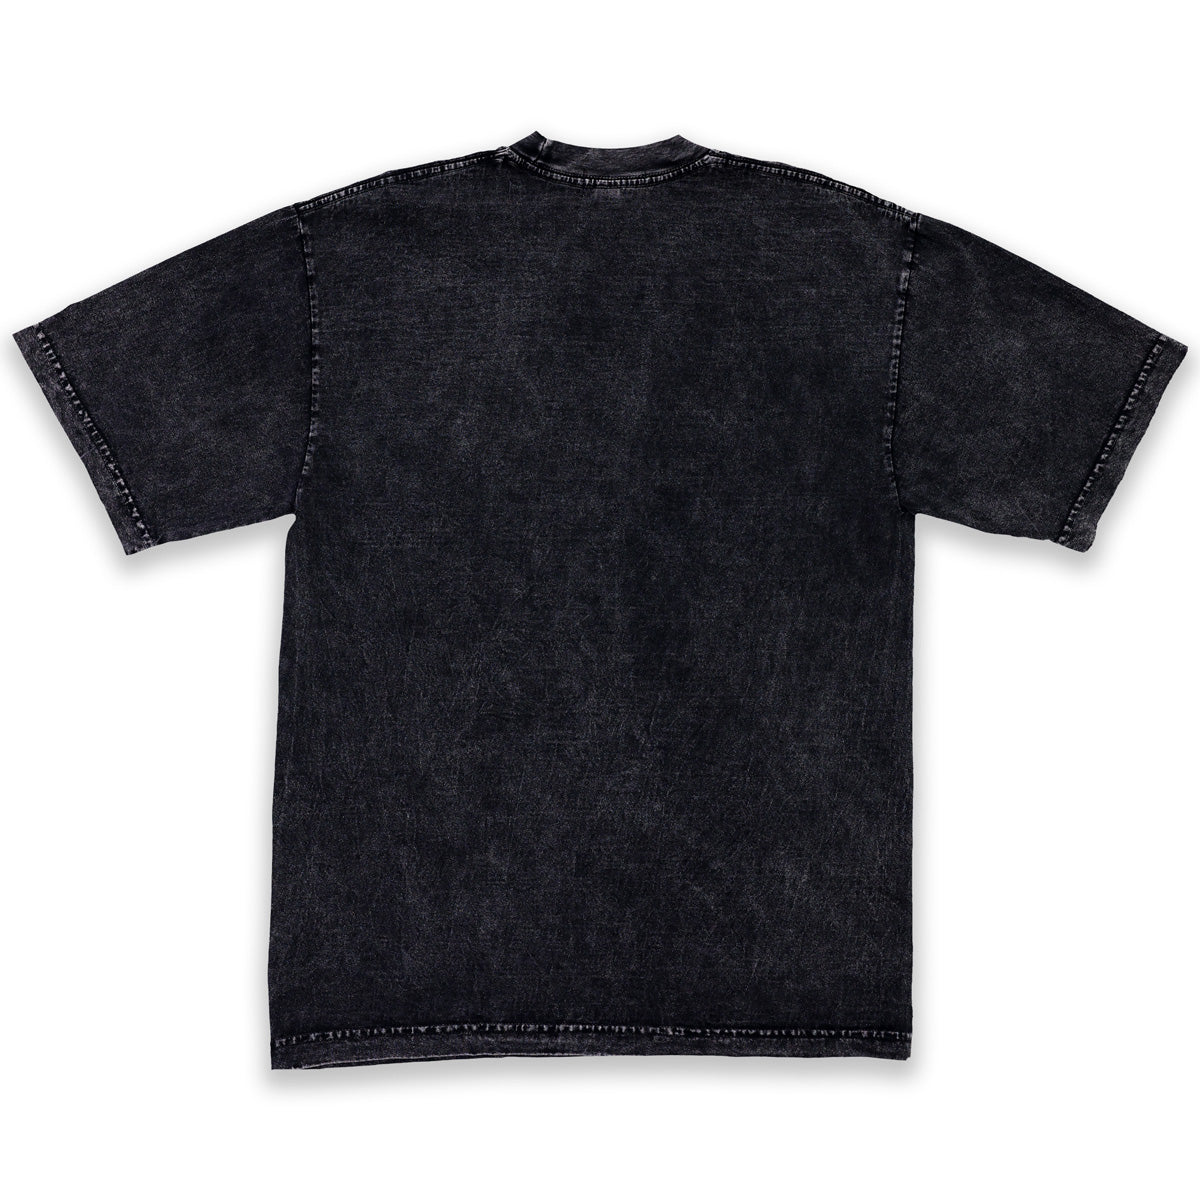 Marathon Ultra Leisure T-Shirt - Washed Carbon Black - Back